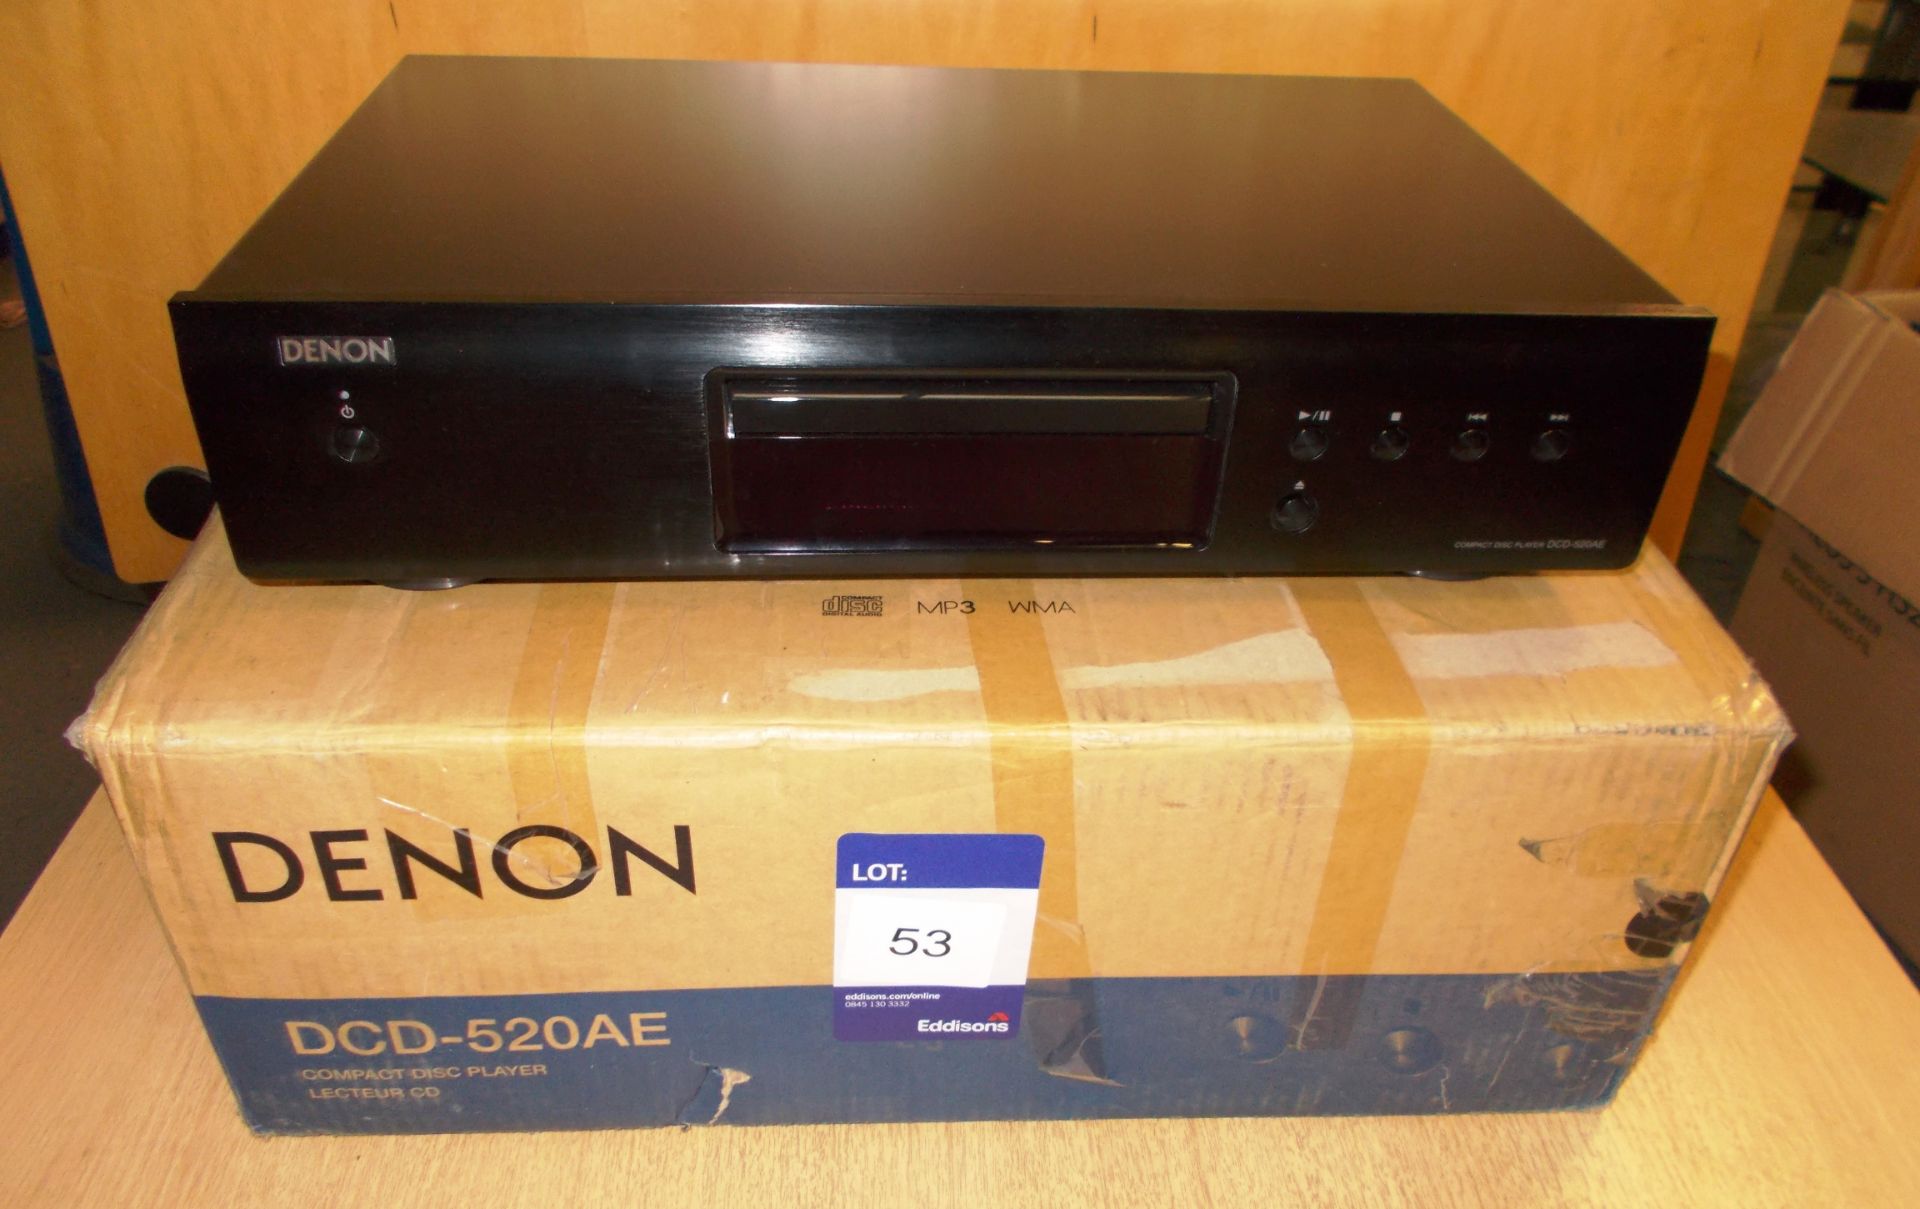 Denon DCD-520 AE Compact Disc Player, black (on display) – RRP £170